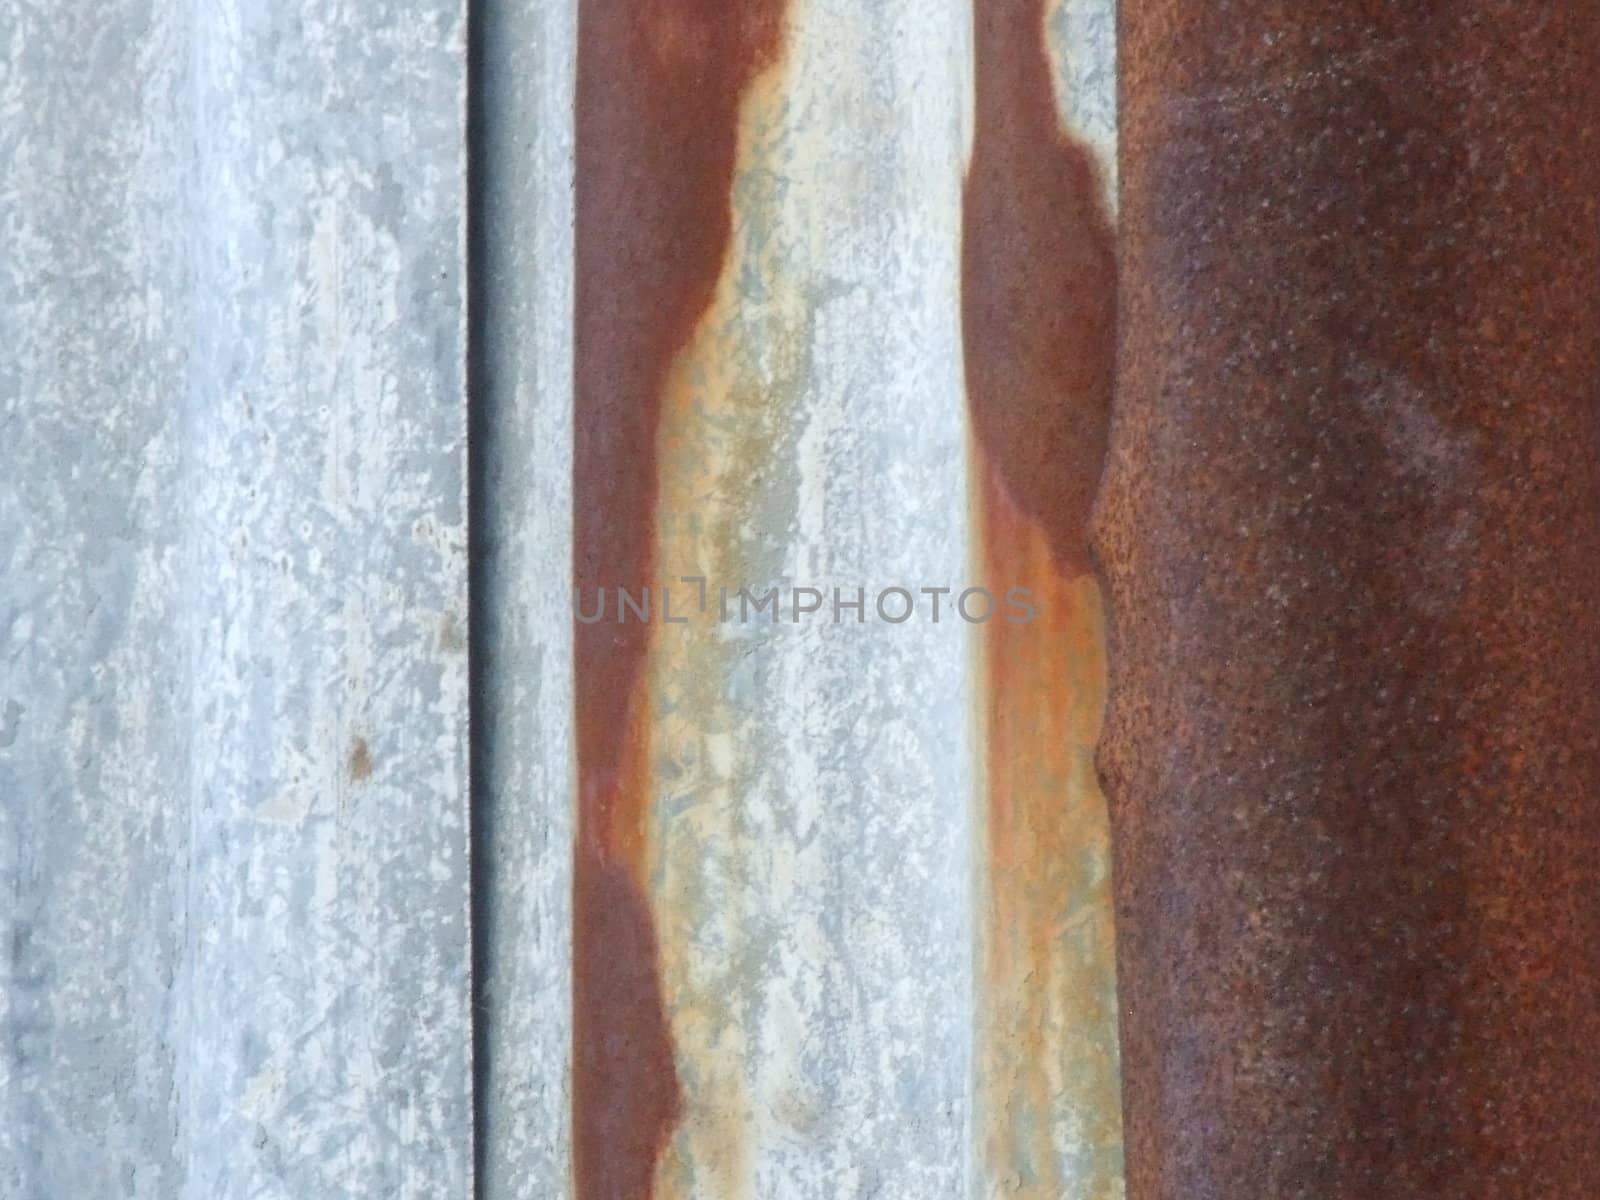 Corrugated Rusty Steel by steveabcuk